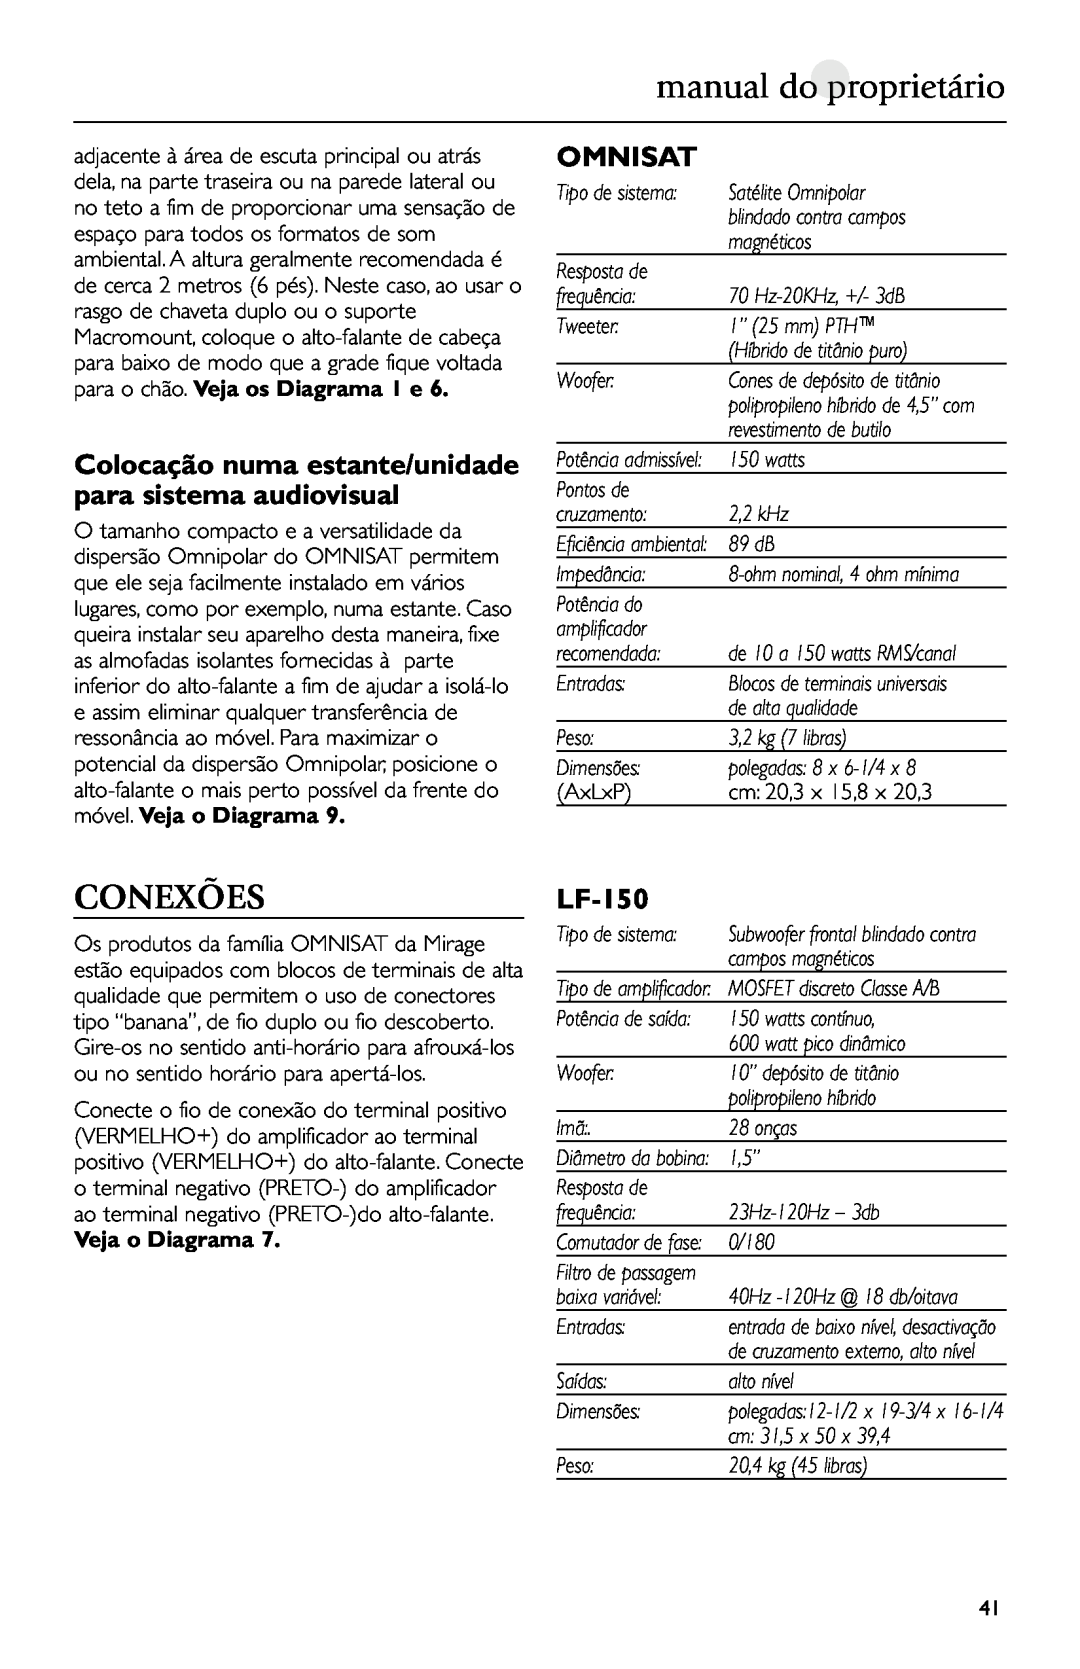 Mirage Loudspeakers Omnisat owner manual manual do proprietário, Conexões, LF-150, Veja o Diagrama 